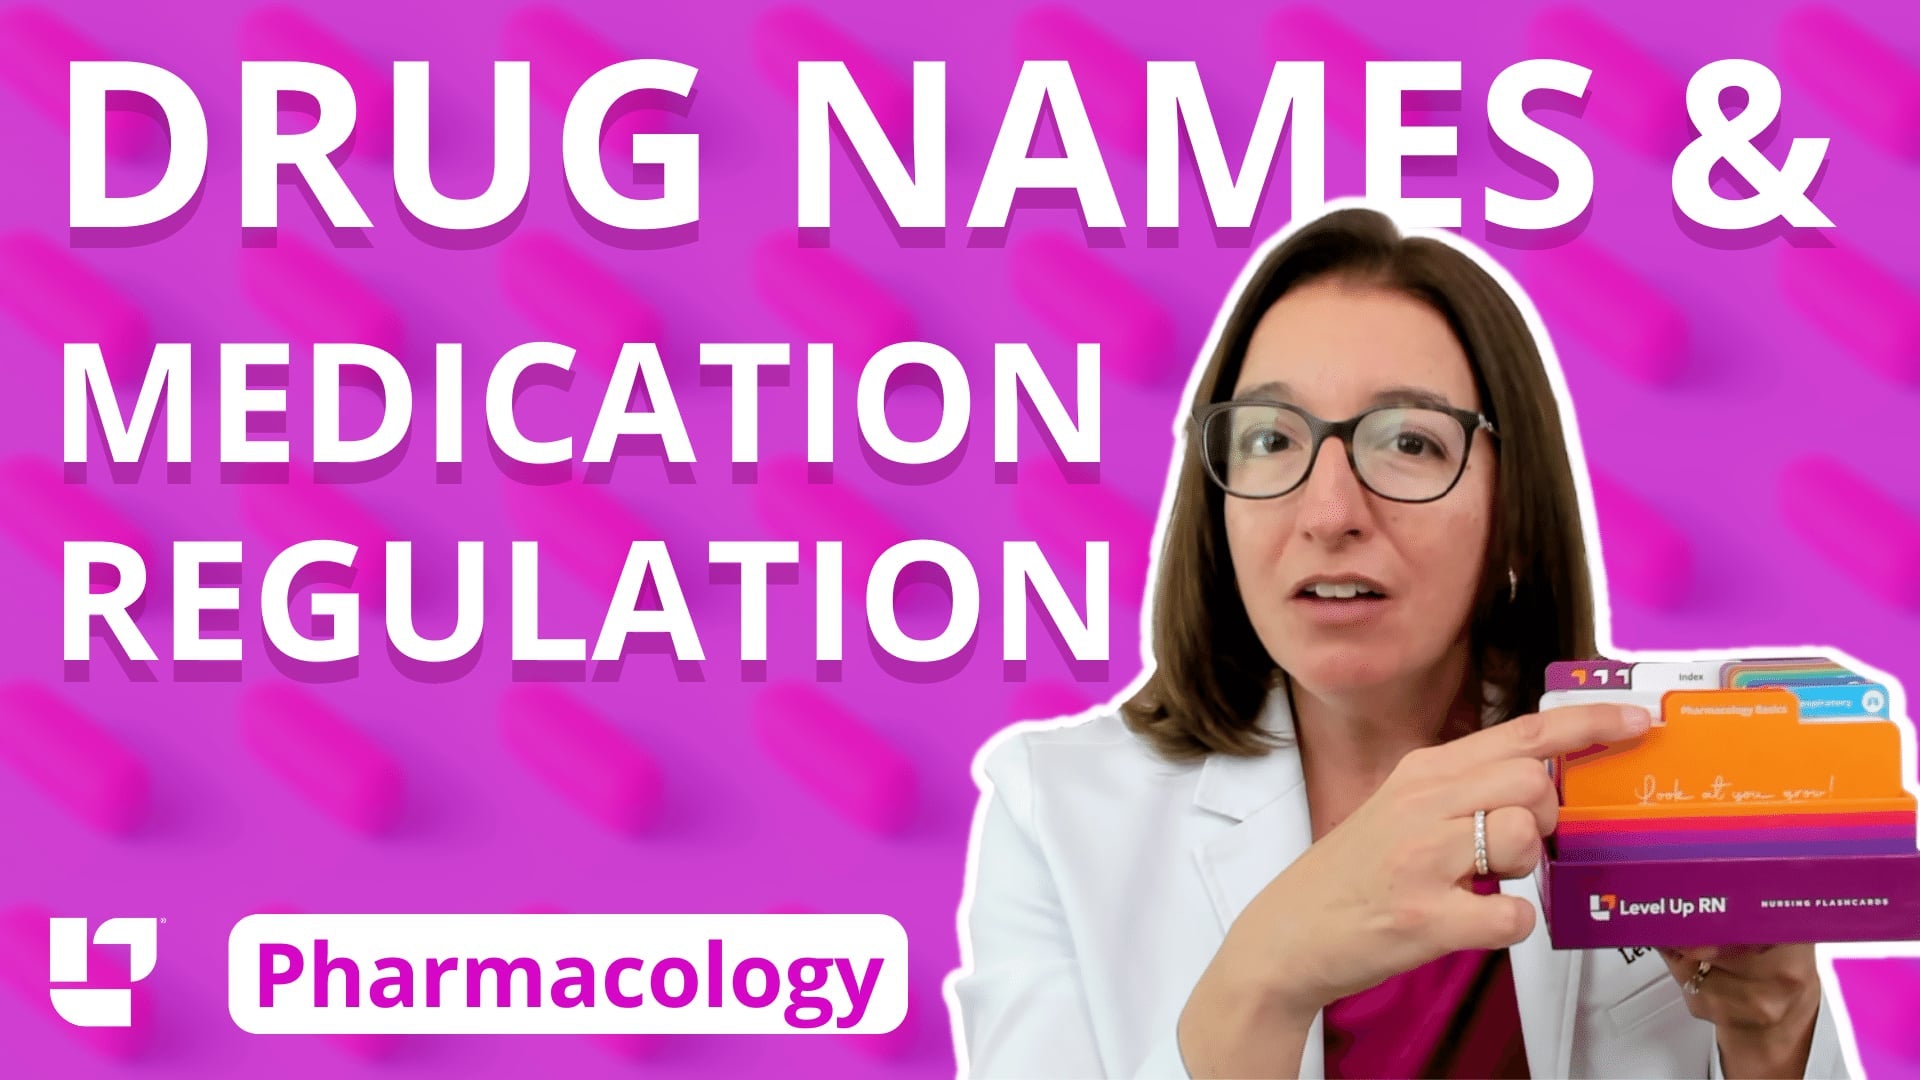 Pharmacology, part 2: Drug Names & Medication Regulation - LevelUpRN